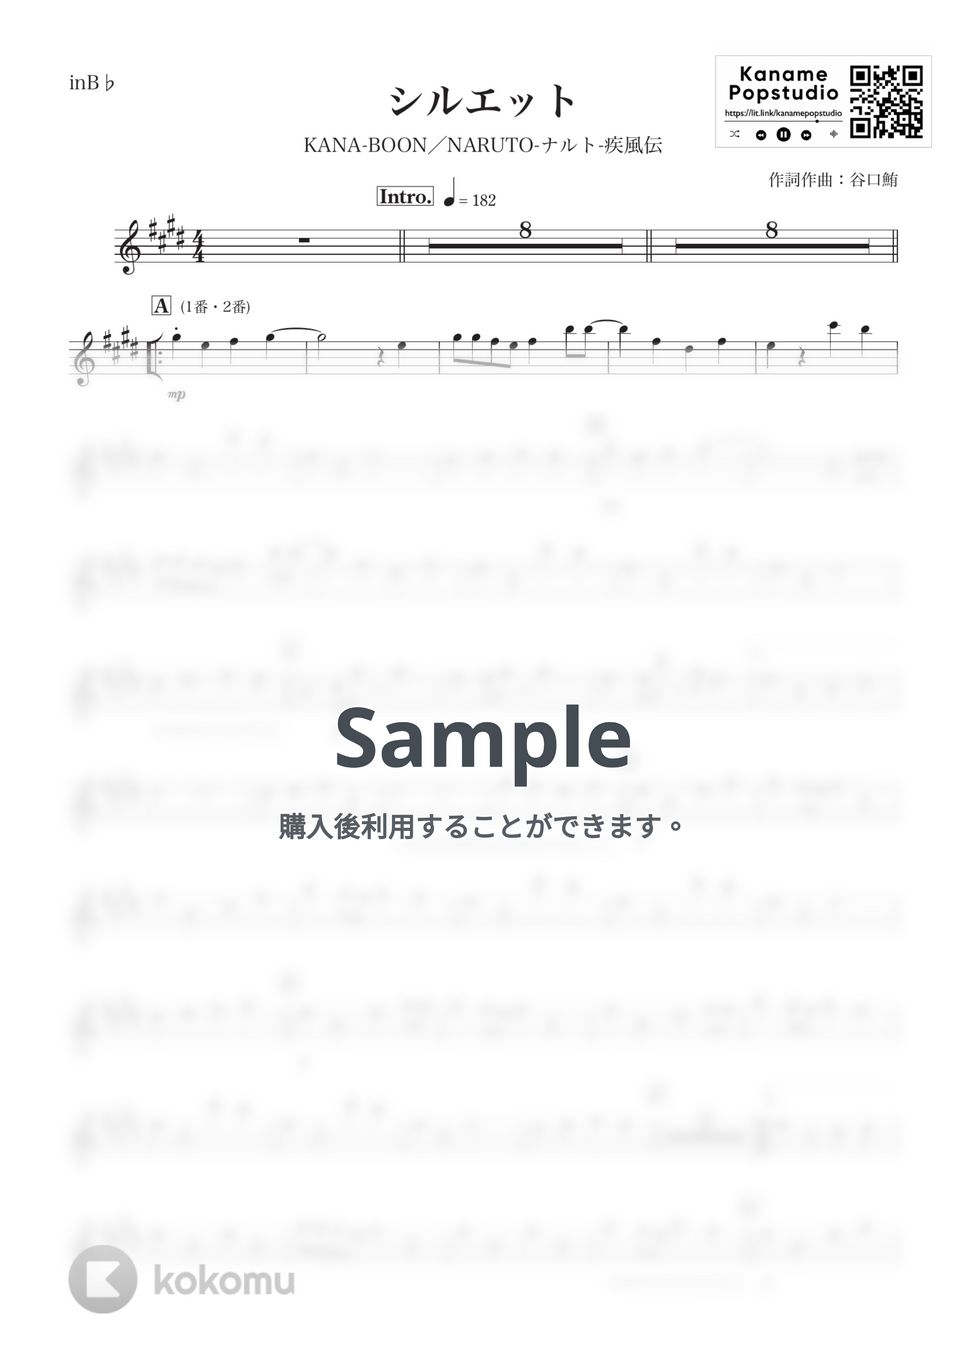 KANA-BOON - 【ナルト疾風伝】シルエット (B♭) by Kaname@Popstudio